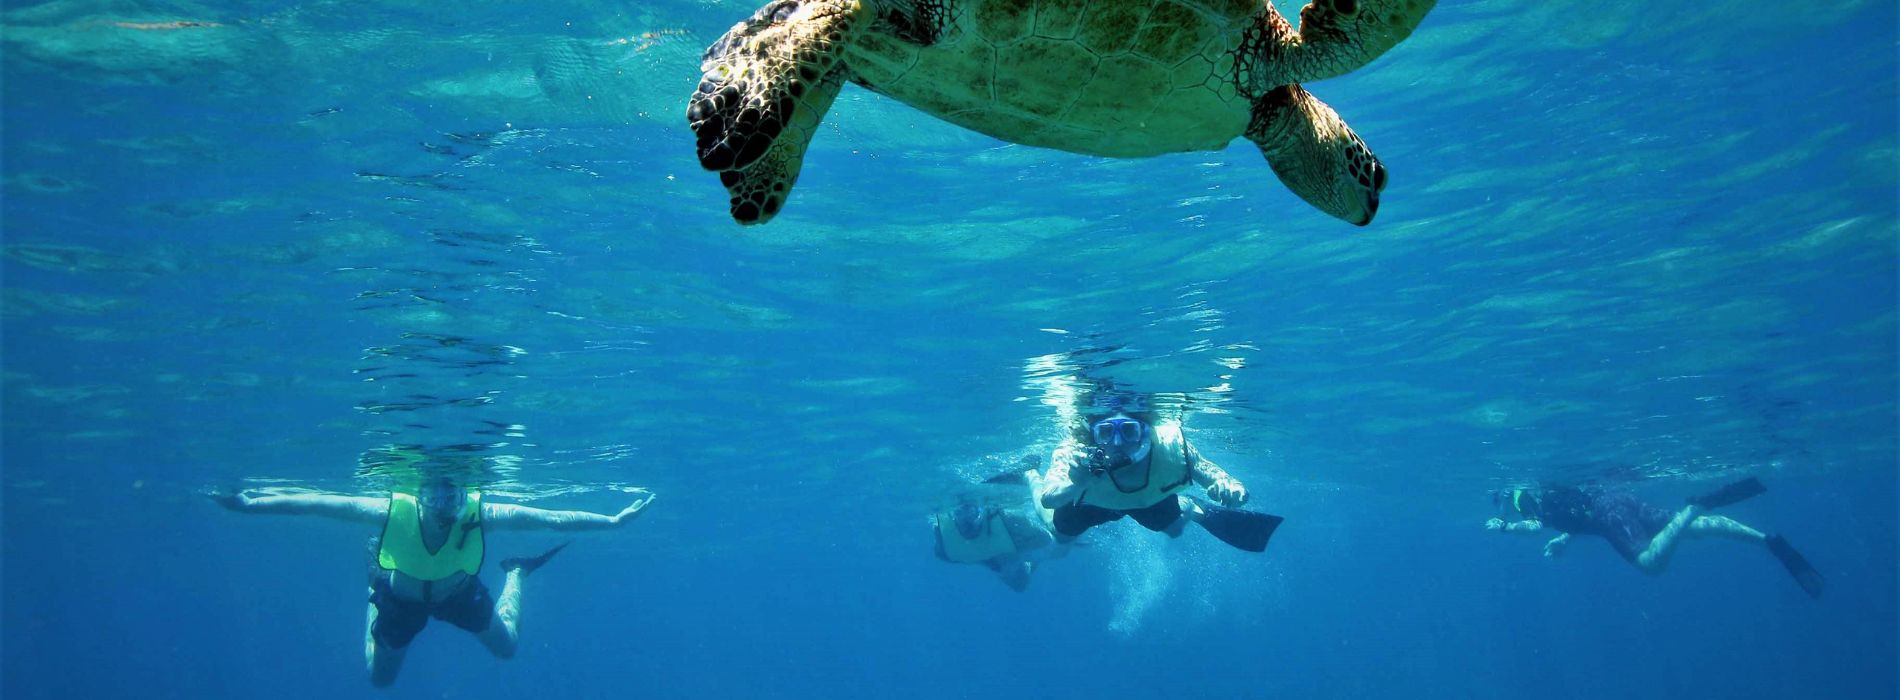 Snorkeling with Sea Turtles in Barbados